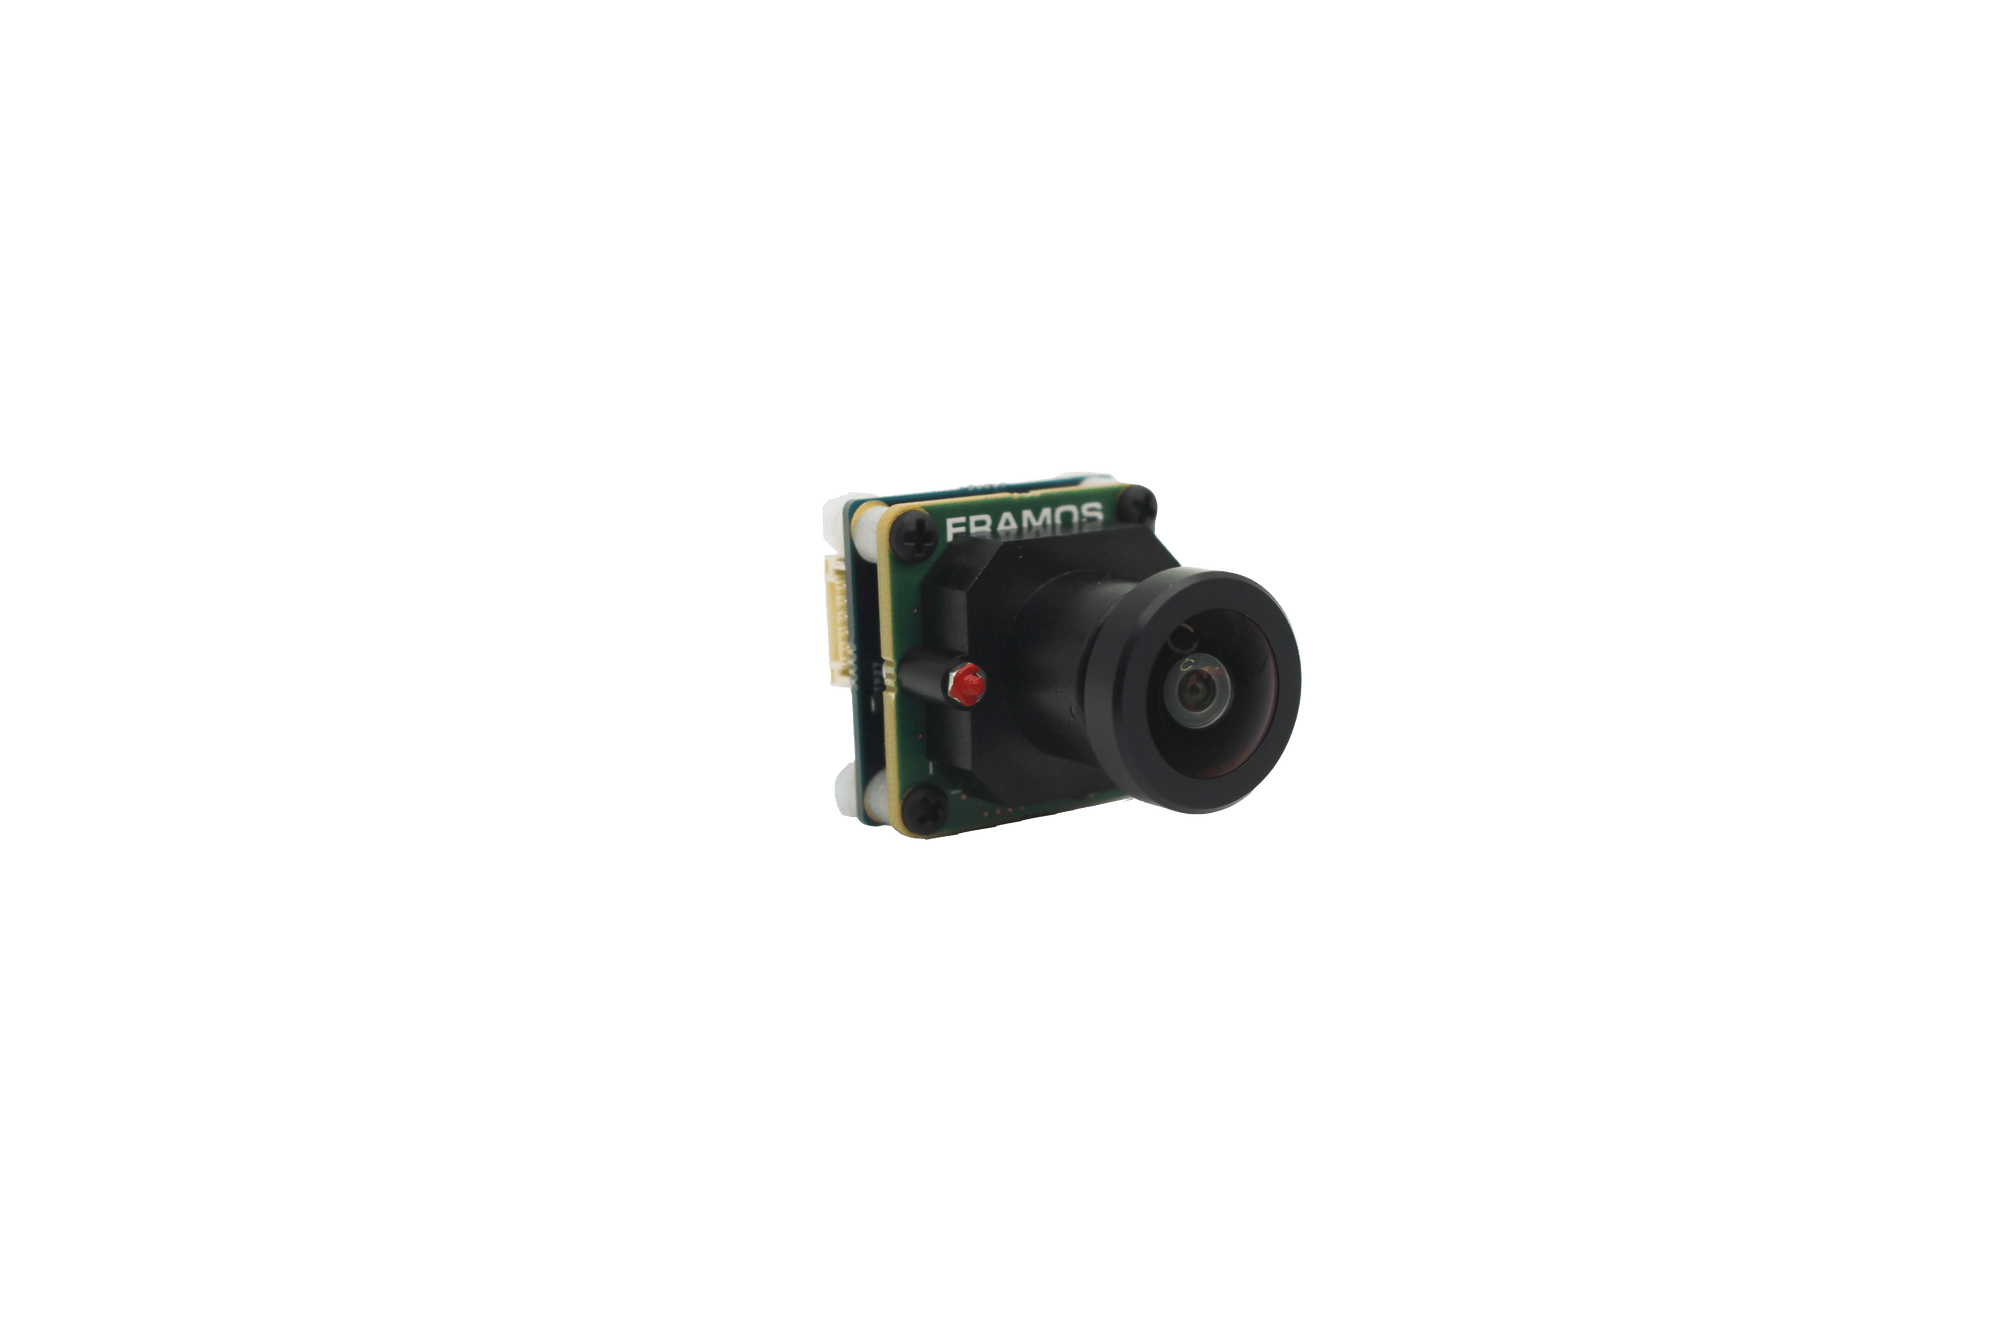 ModalAI, Inc. Accessory (BETA) 4k High-resolution, Low-light Sensor for VOXL® (Starvis IMX412 w/ M12-style Lens)